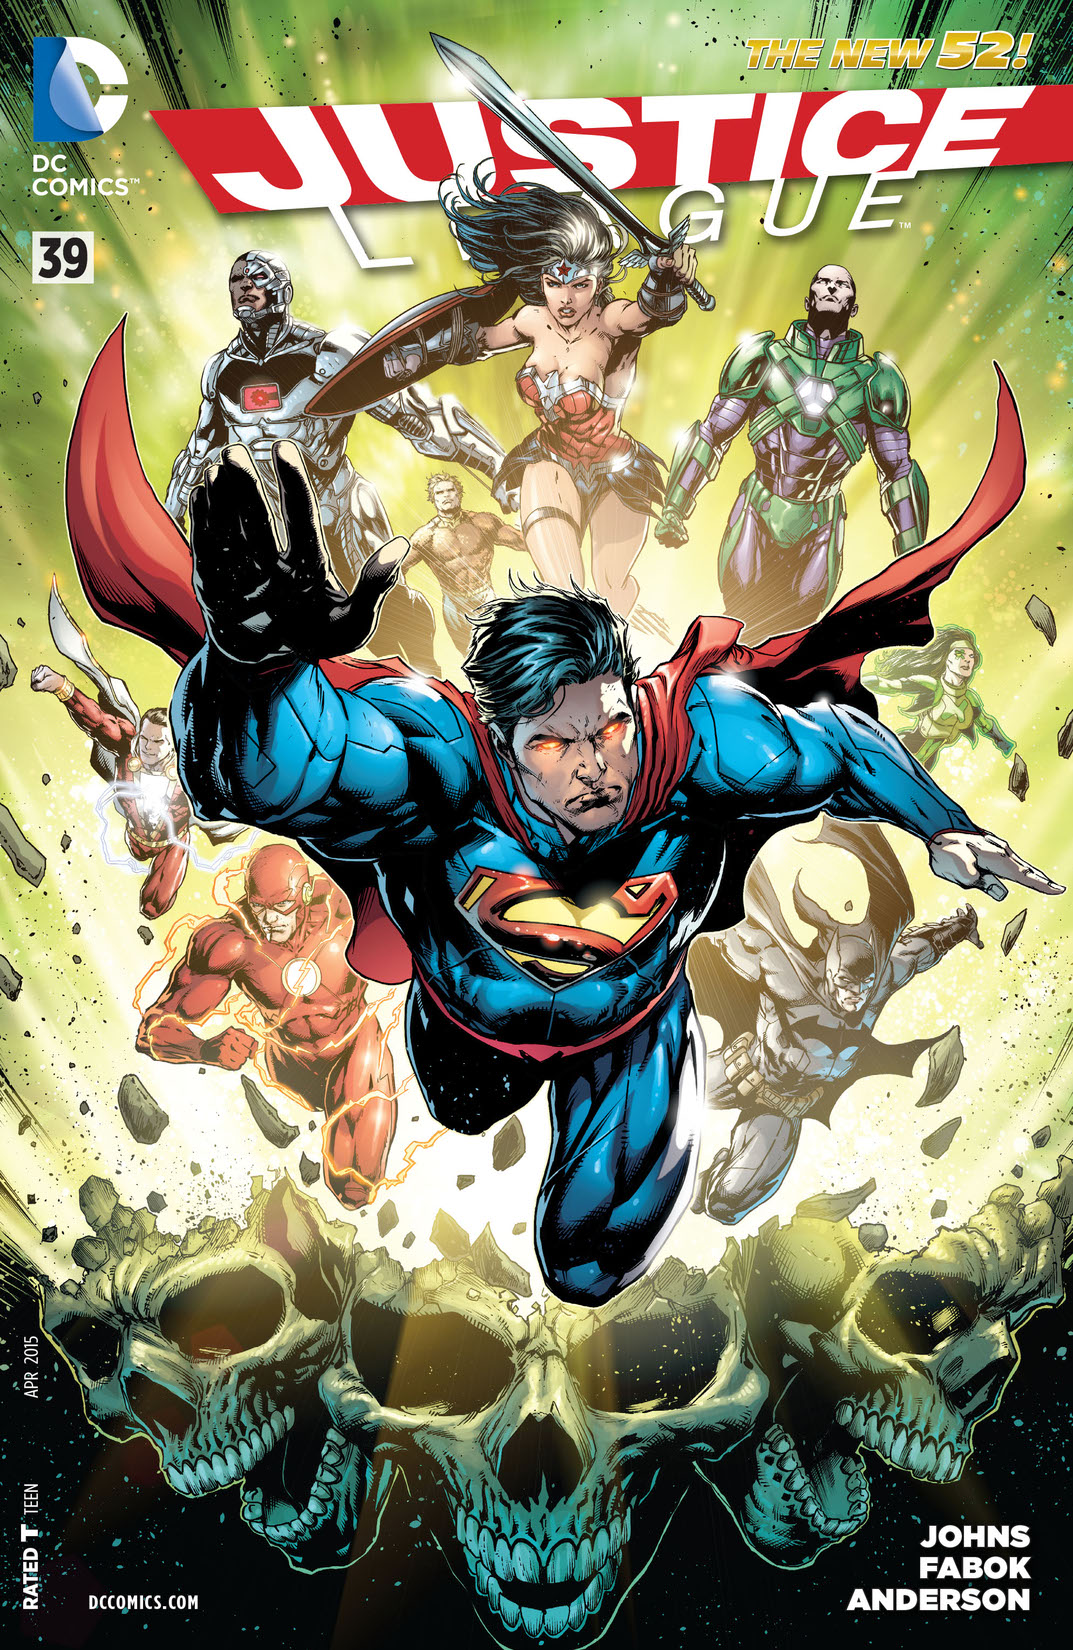 Justice League (2011-) #39 preview images